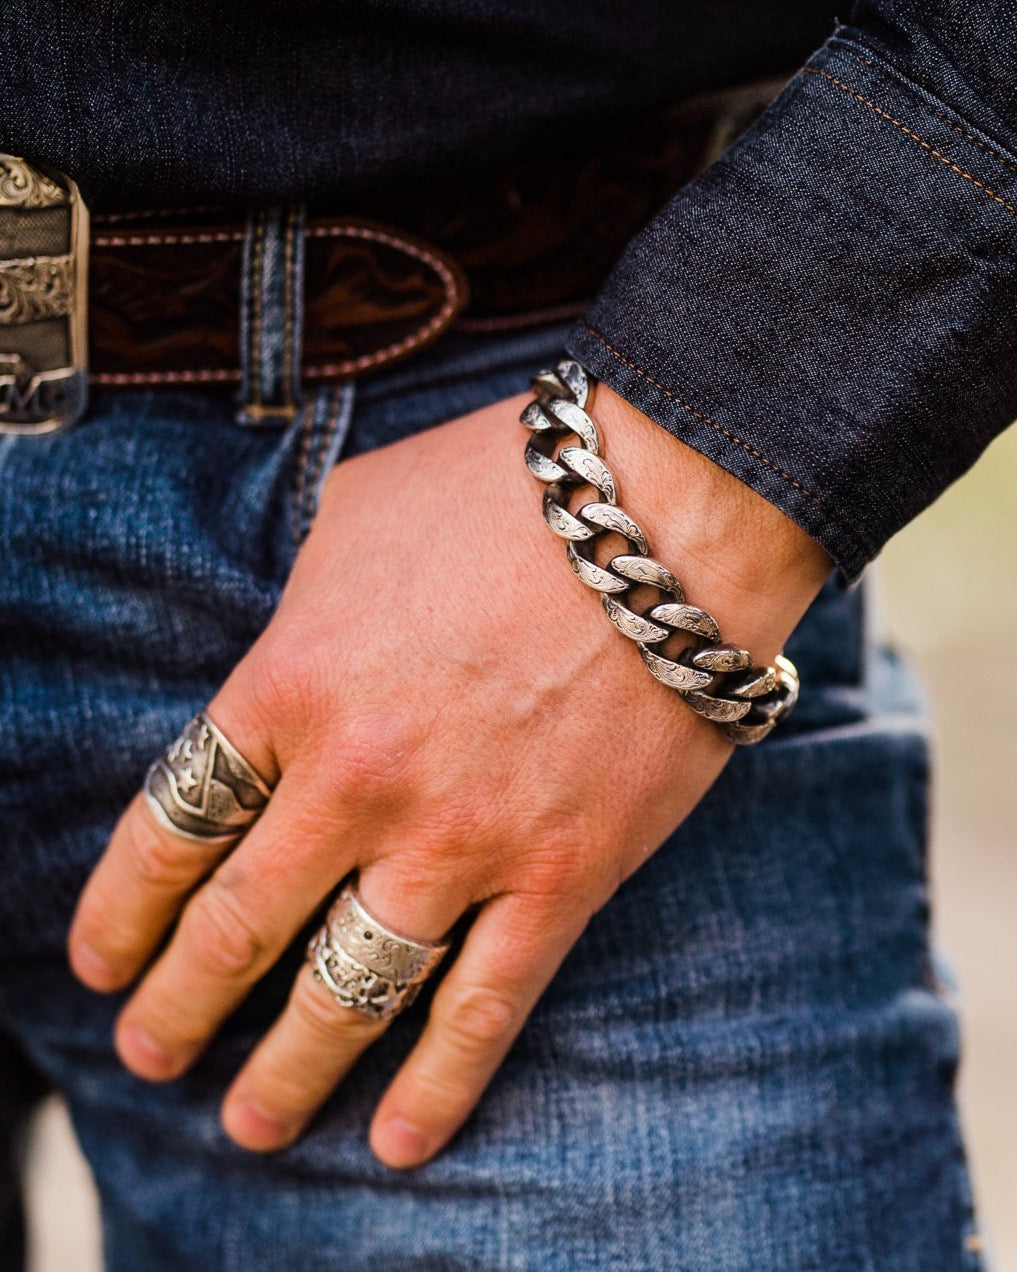 Silver Bracelet For Men - Buy Silver Bracelet For Men online in India